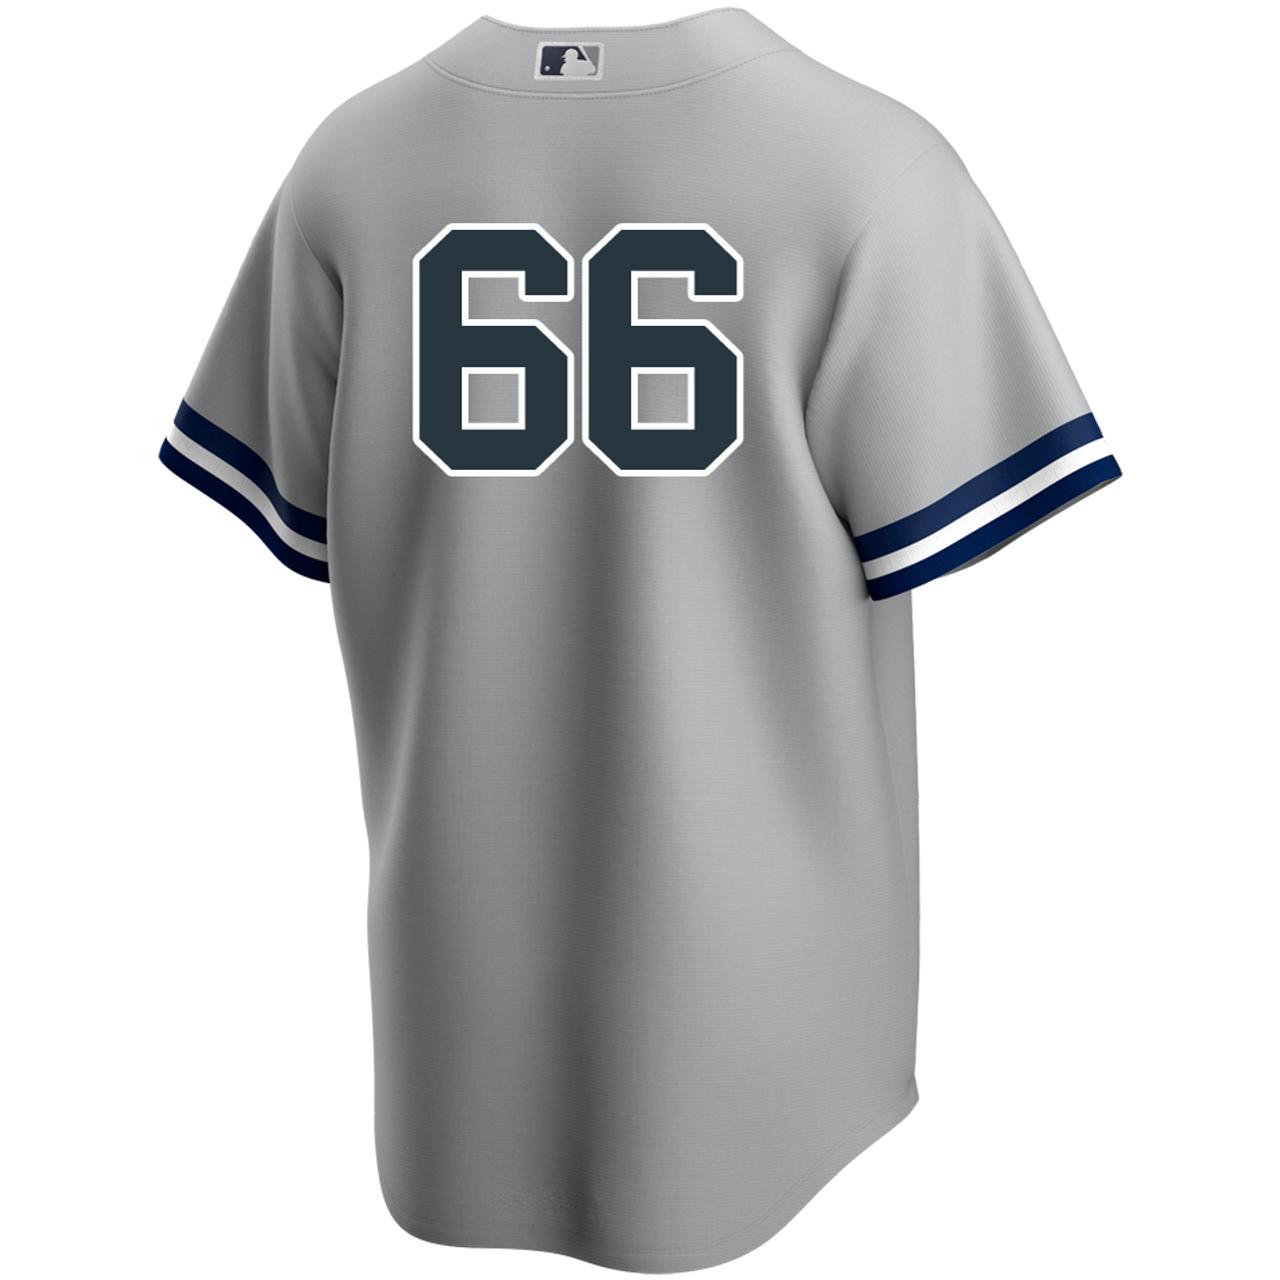 Kyle Higashioka No Name Road Jersey - NY Yankees Number Only